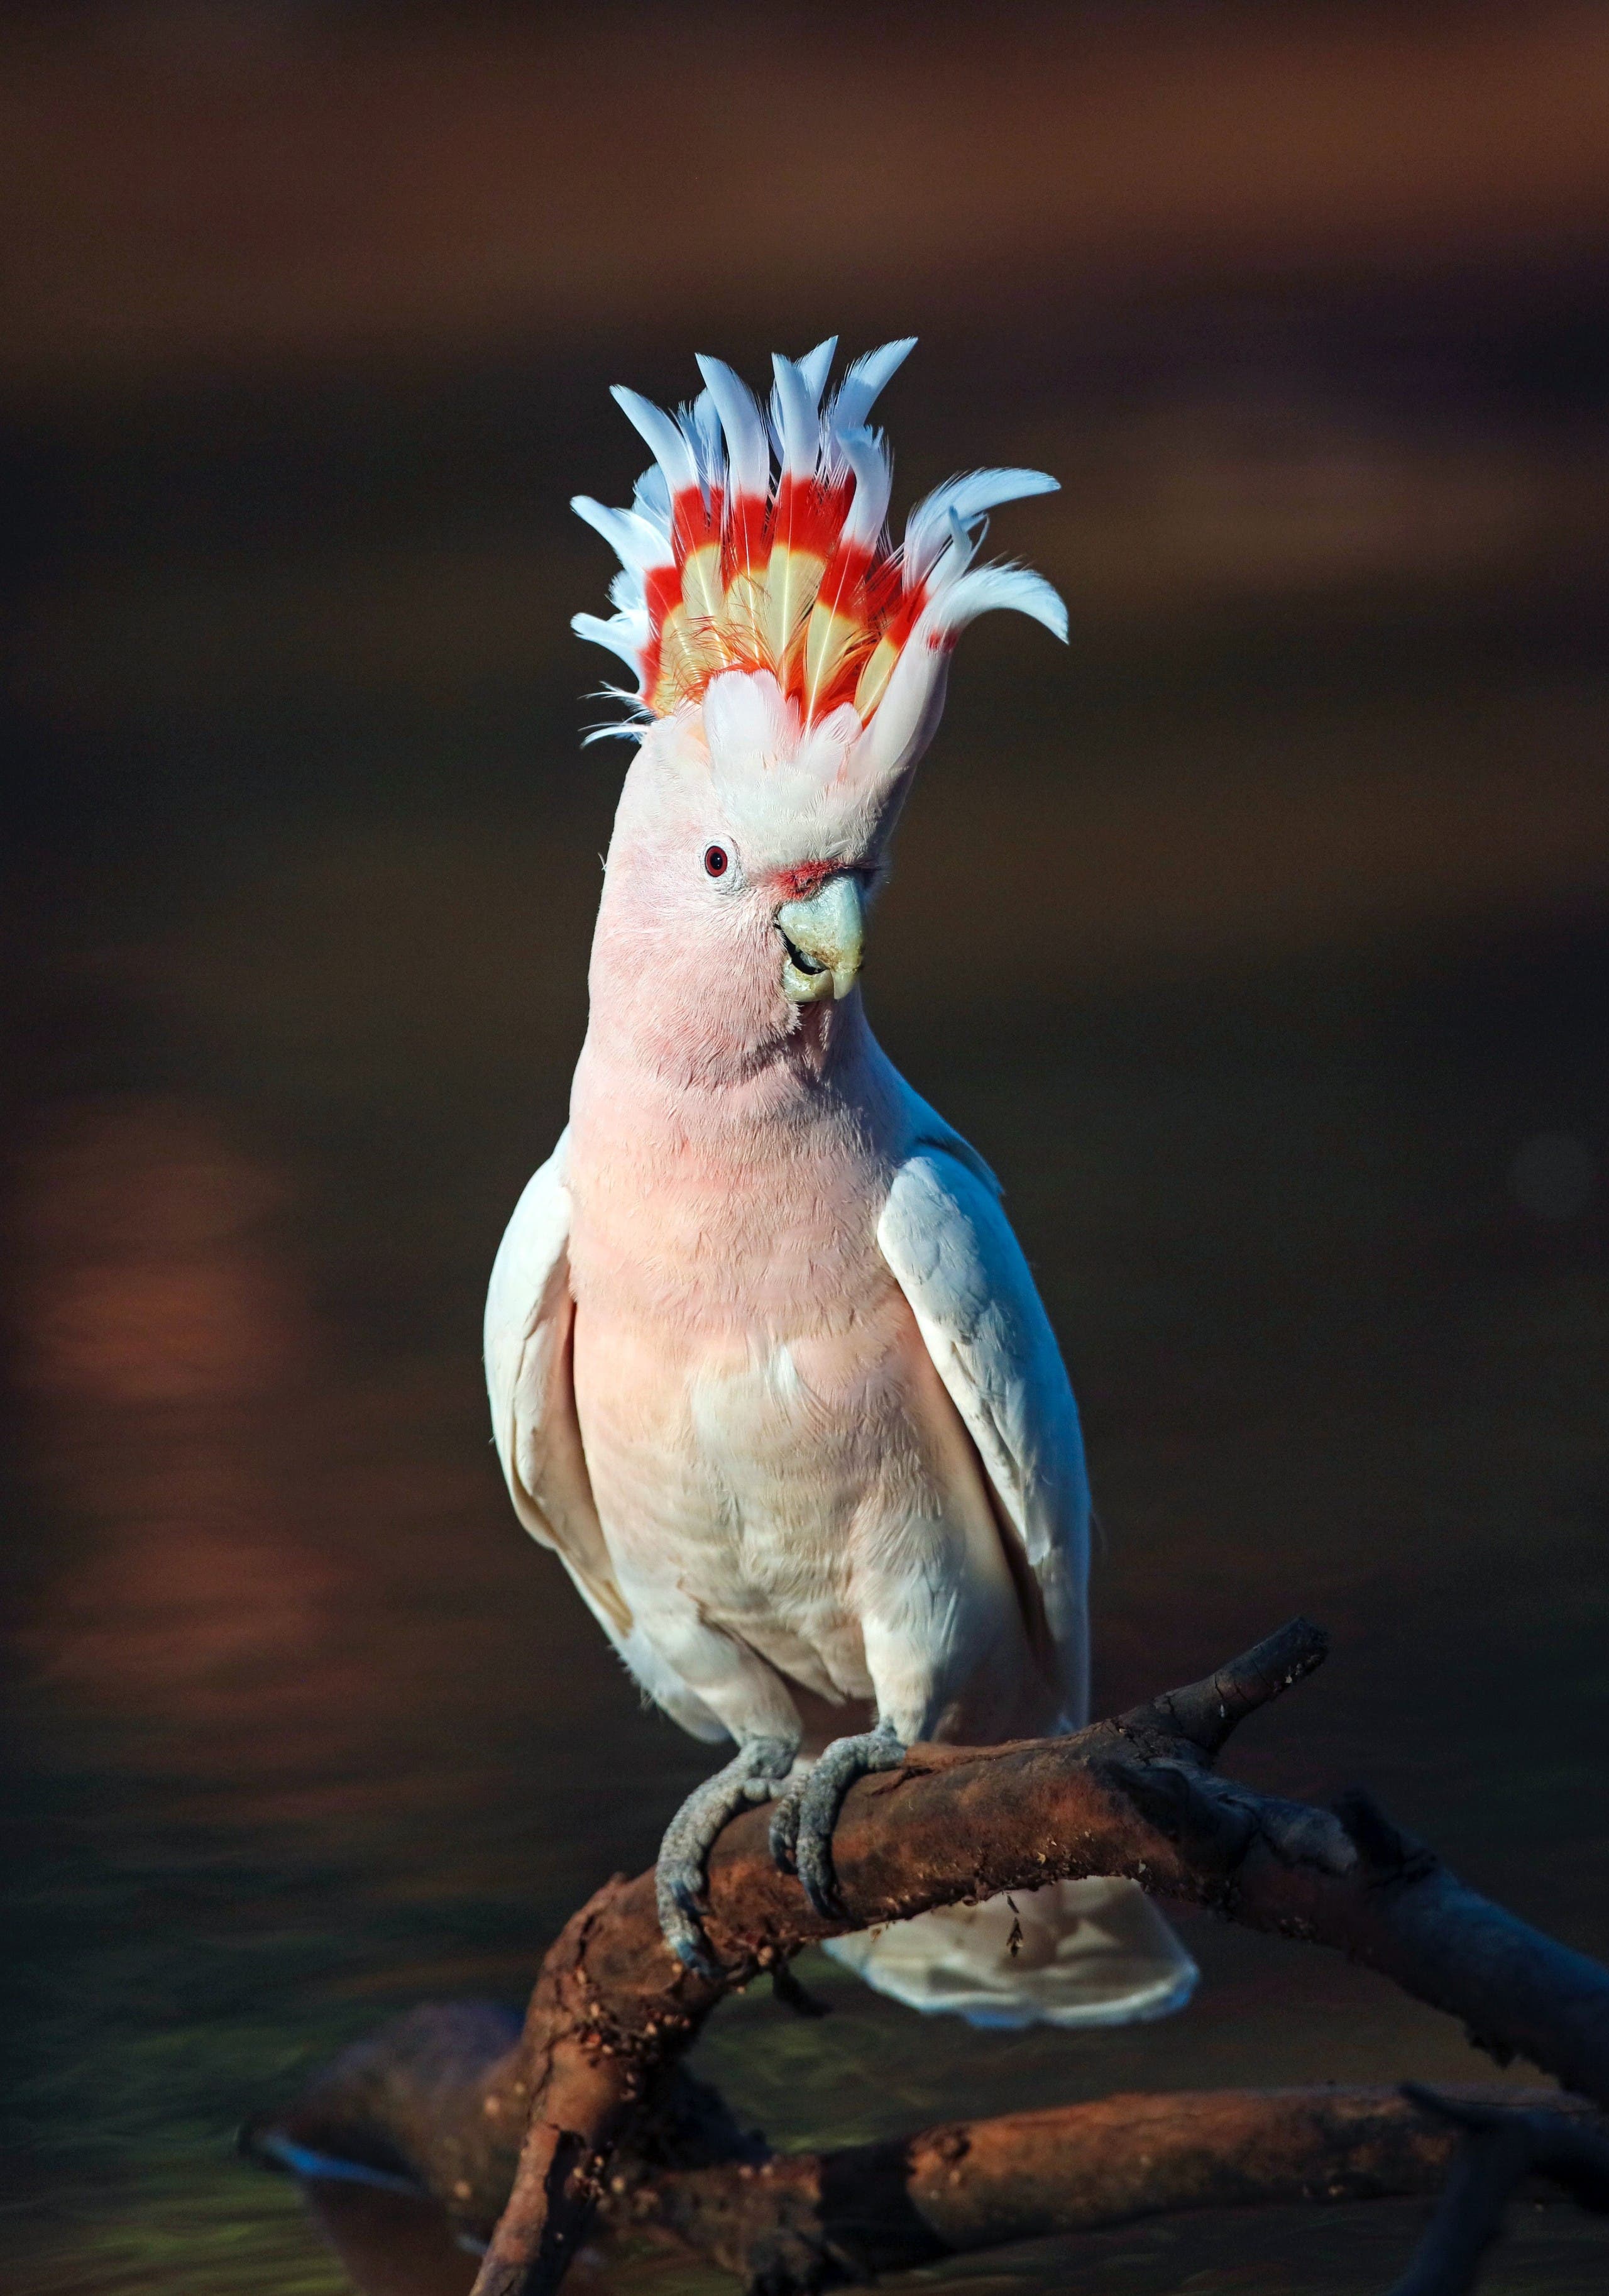 Cockatoo bird. (Unsplash, Chris Charles)